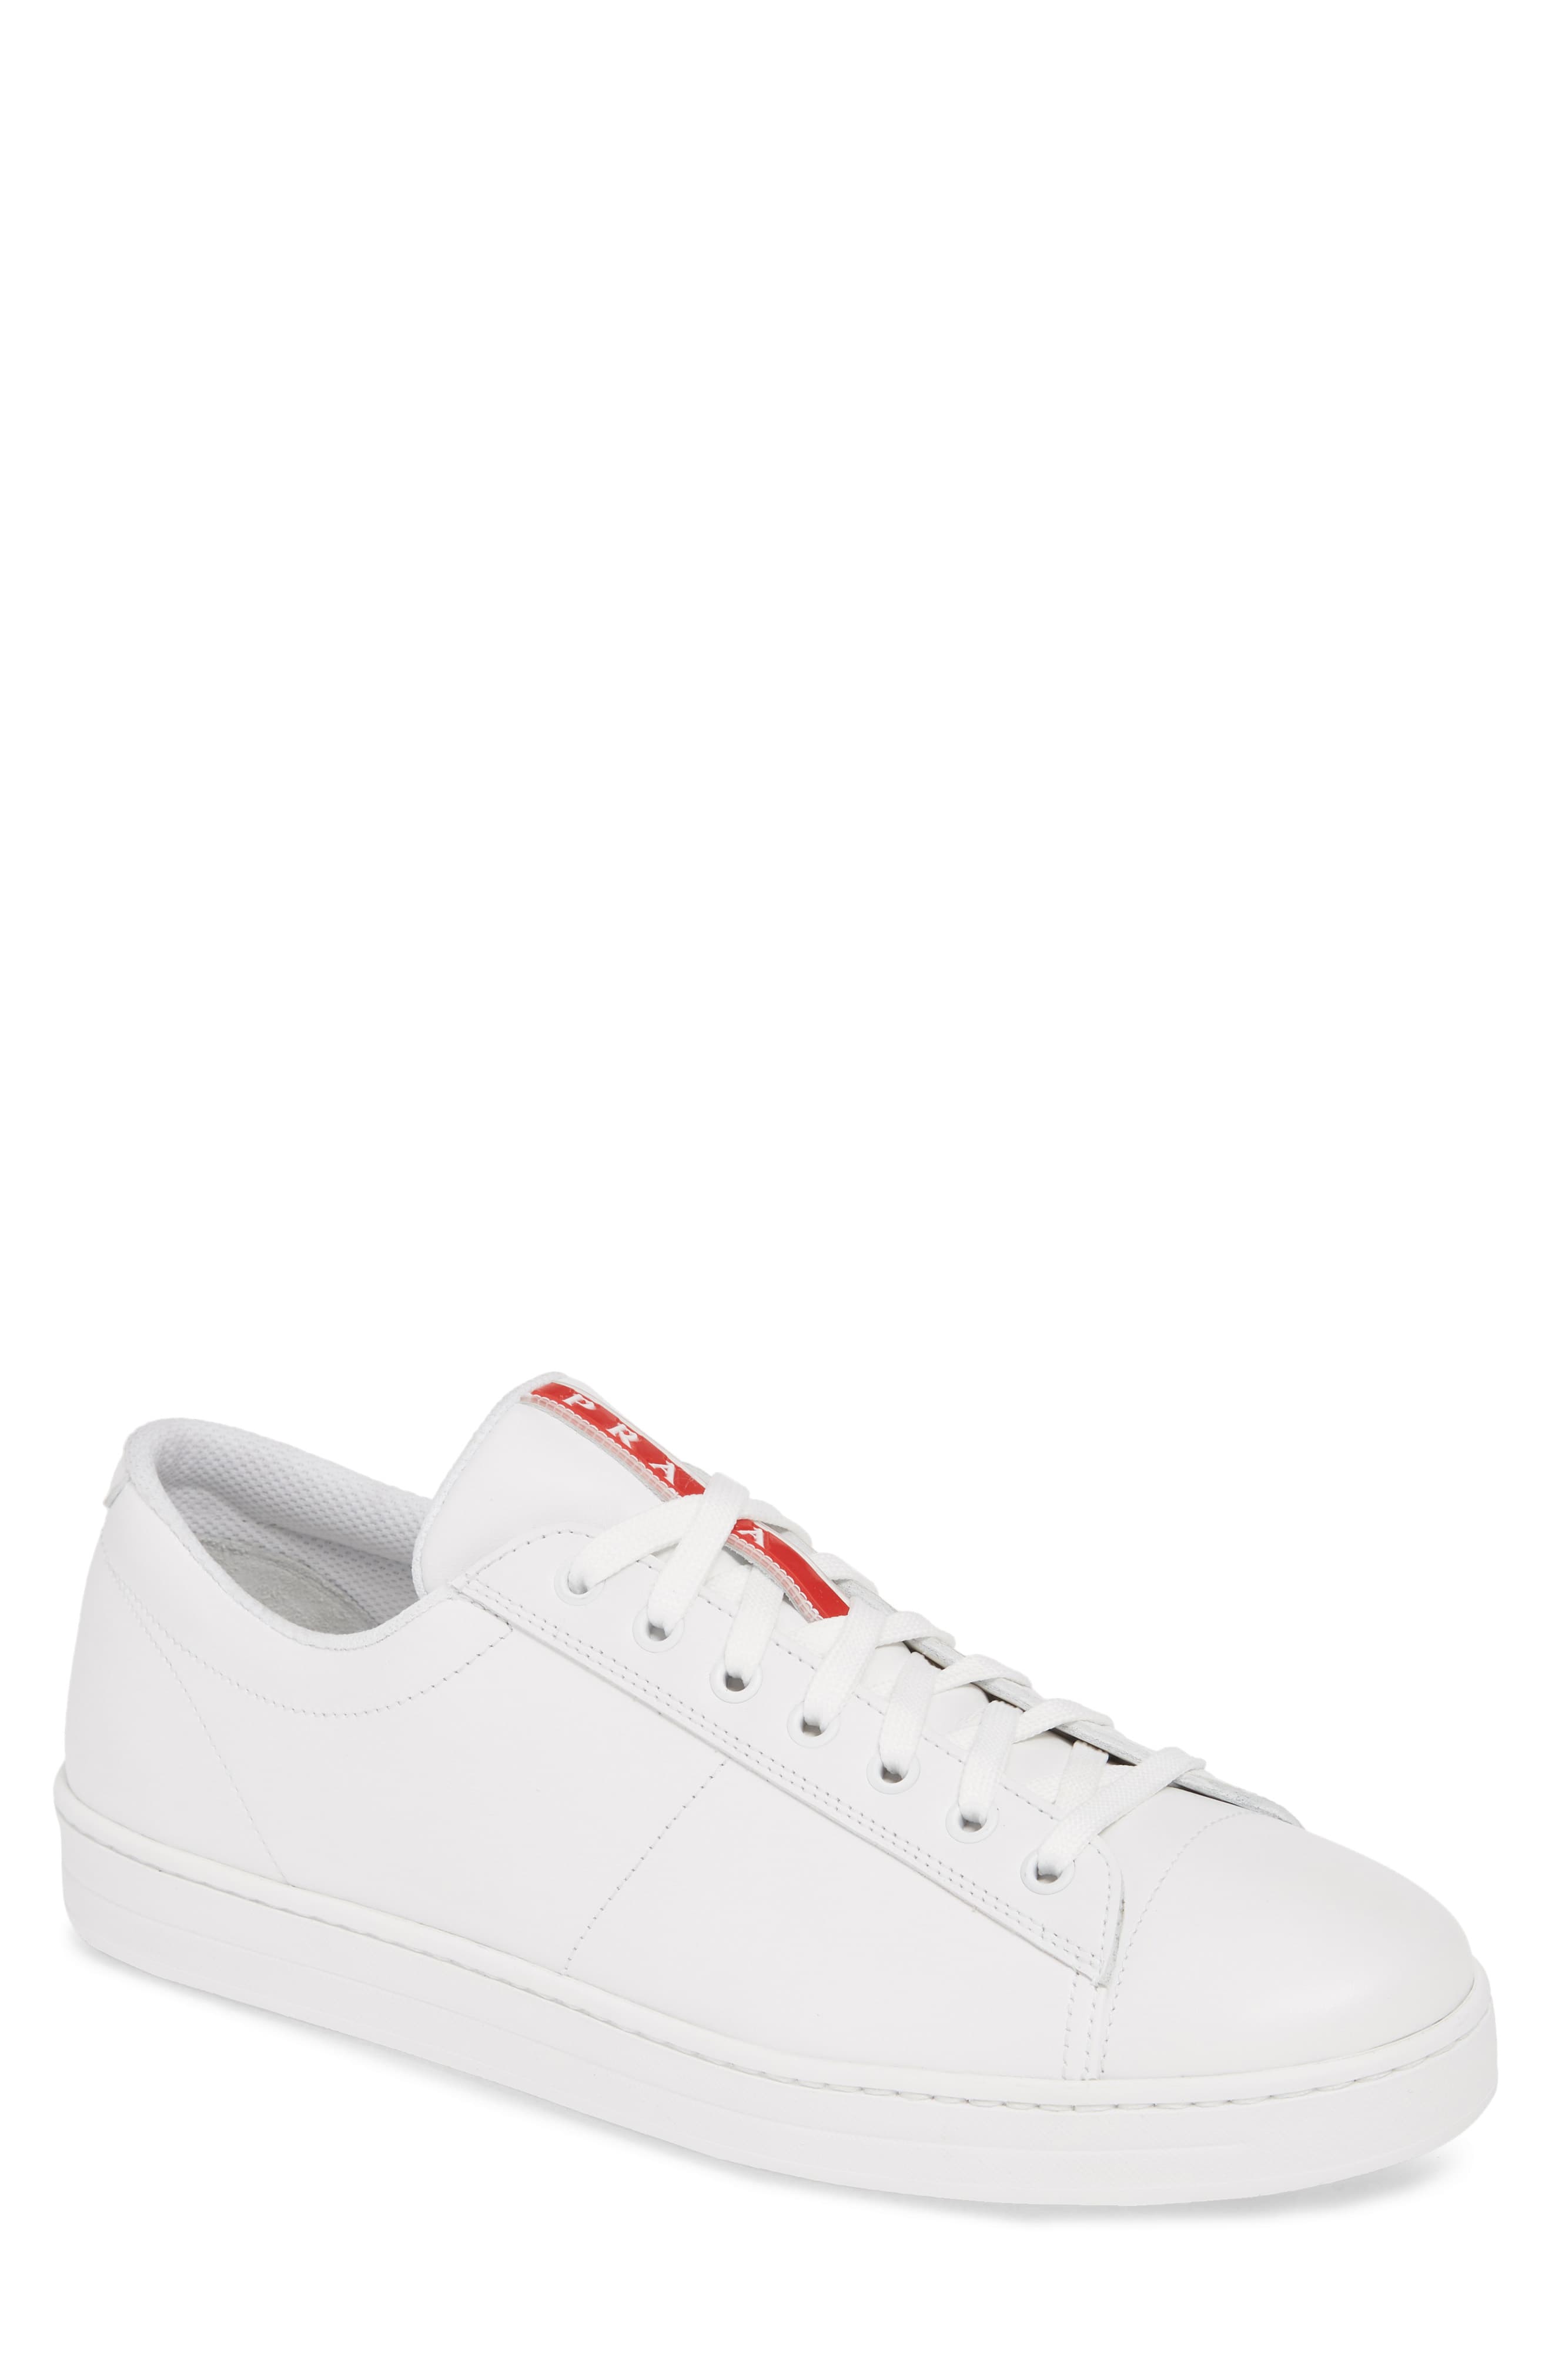 Men’s Prada The Avenue Sneaker, Size 8US / 7UK – White | The Fashionisto